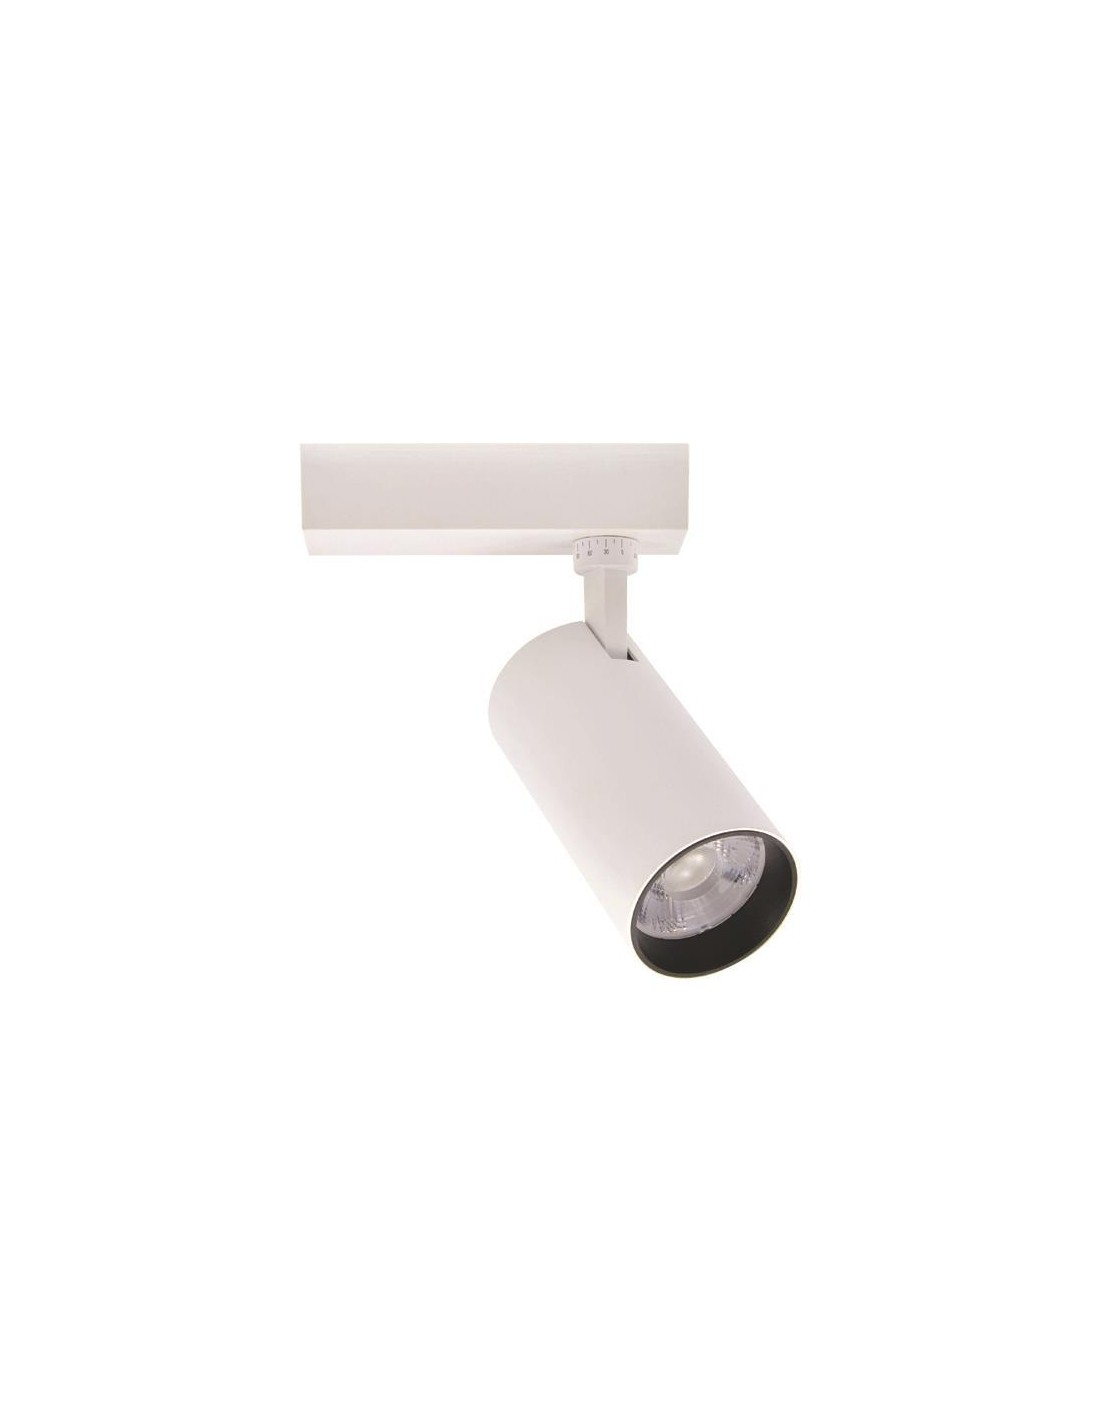 Foco LED blanco 20W SMD 1600Lm Blanco neutro 4000K 230V Exterior/Interior  IP65 Obra Obra ASLO